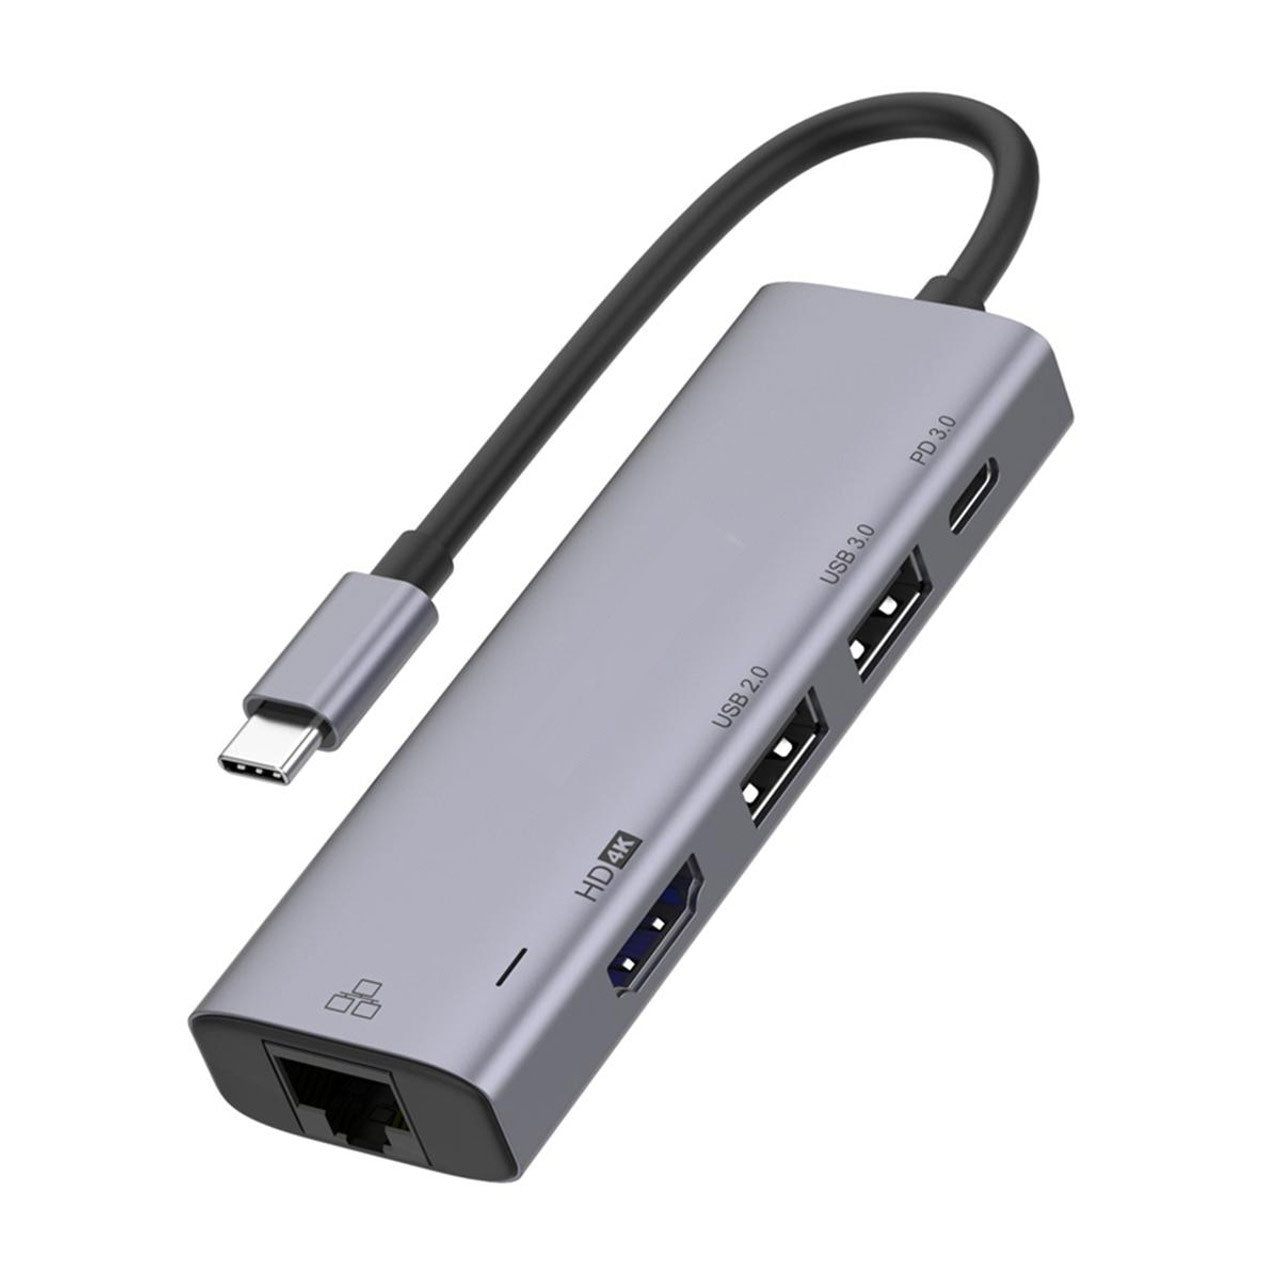 5-in-1 Adapter USB-C Hub   HDTV HDMI   RJ45 Network Port   Charger Port   TV Video Hub  Ethernet  - ONR78 2012-1